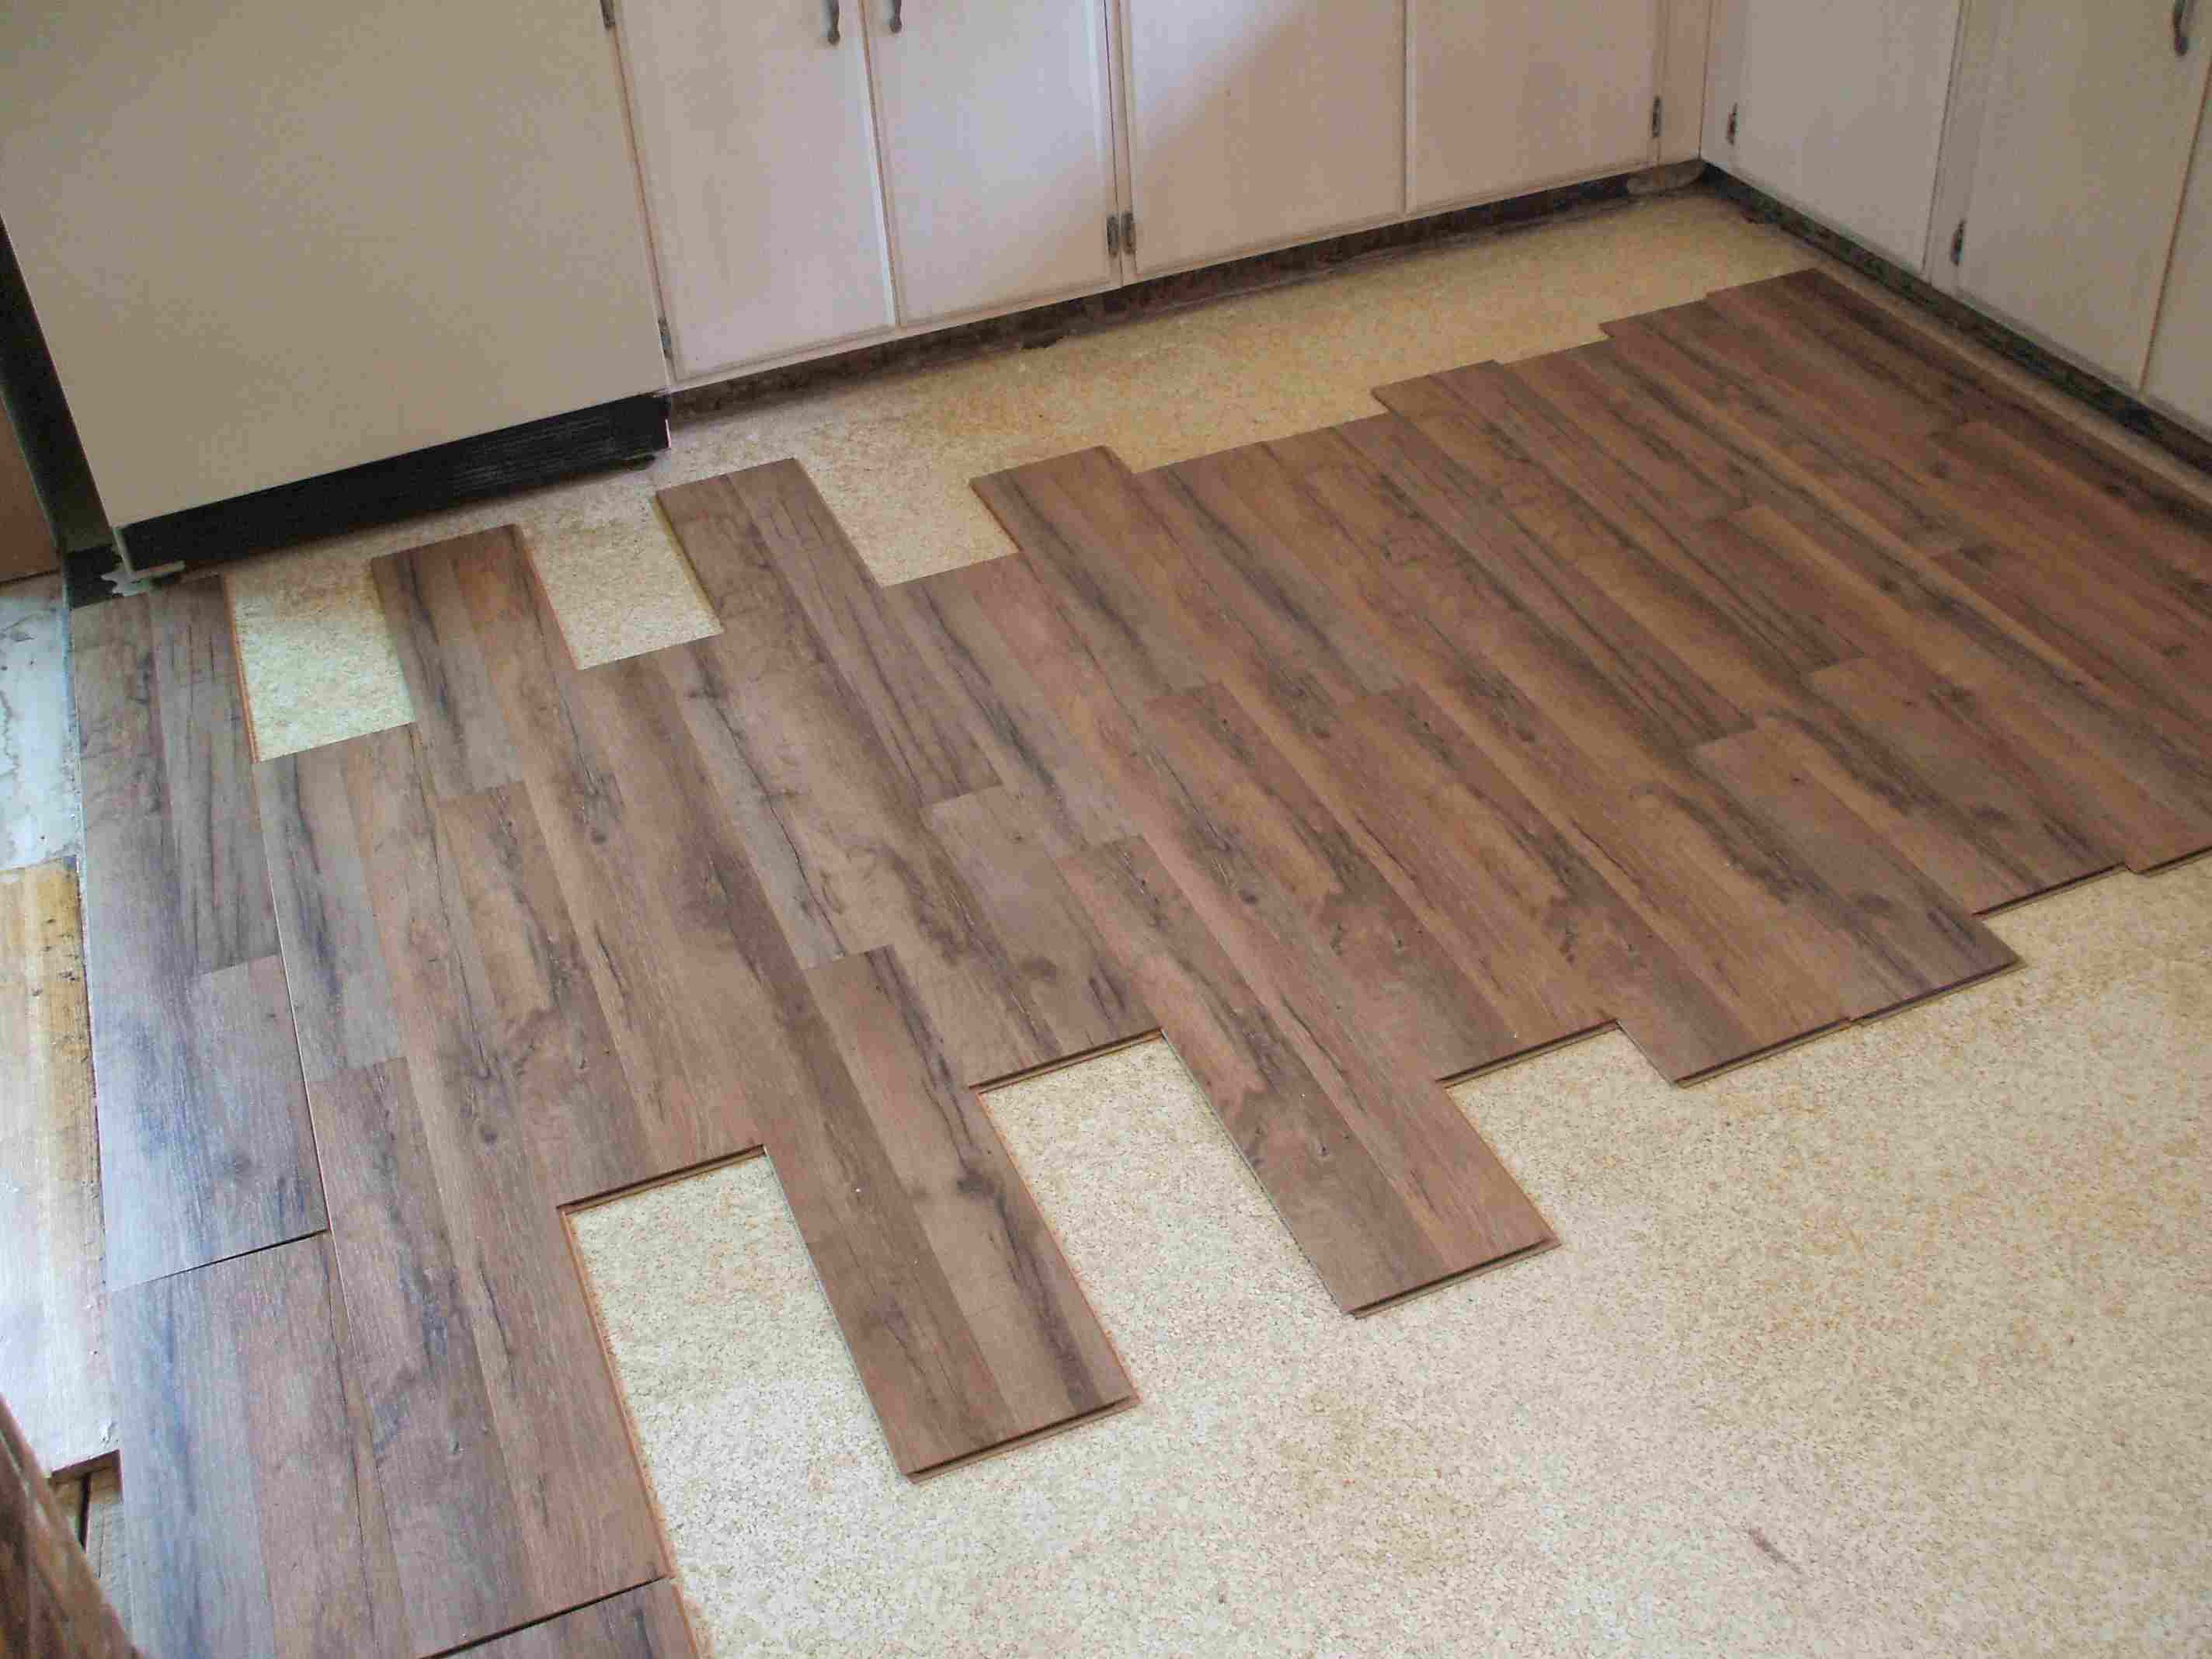 10 Fashionable Hardwood Floors Next to Tile 2022 free download hardwood floors next to tile of laminate flooring installation made easy inside installing laminate eyeballing layout 56a49d075f9b58b7d0d7d693 jpg